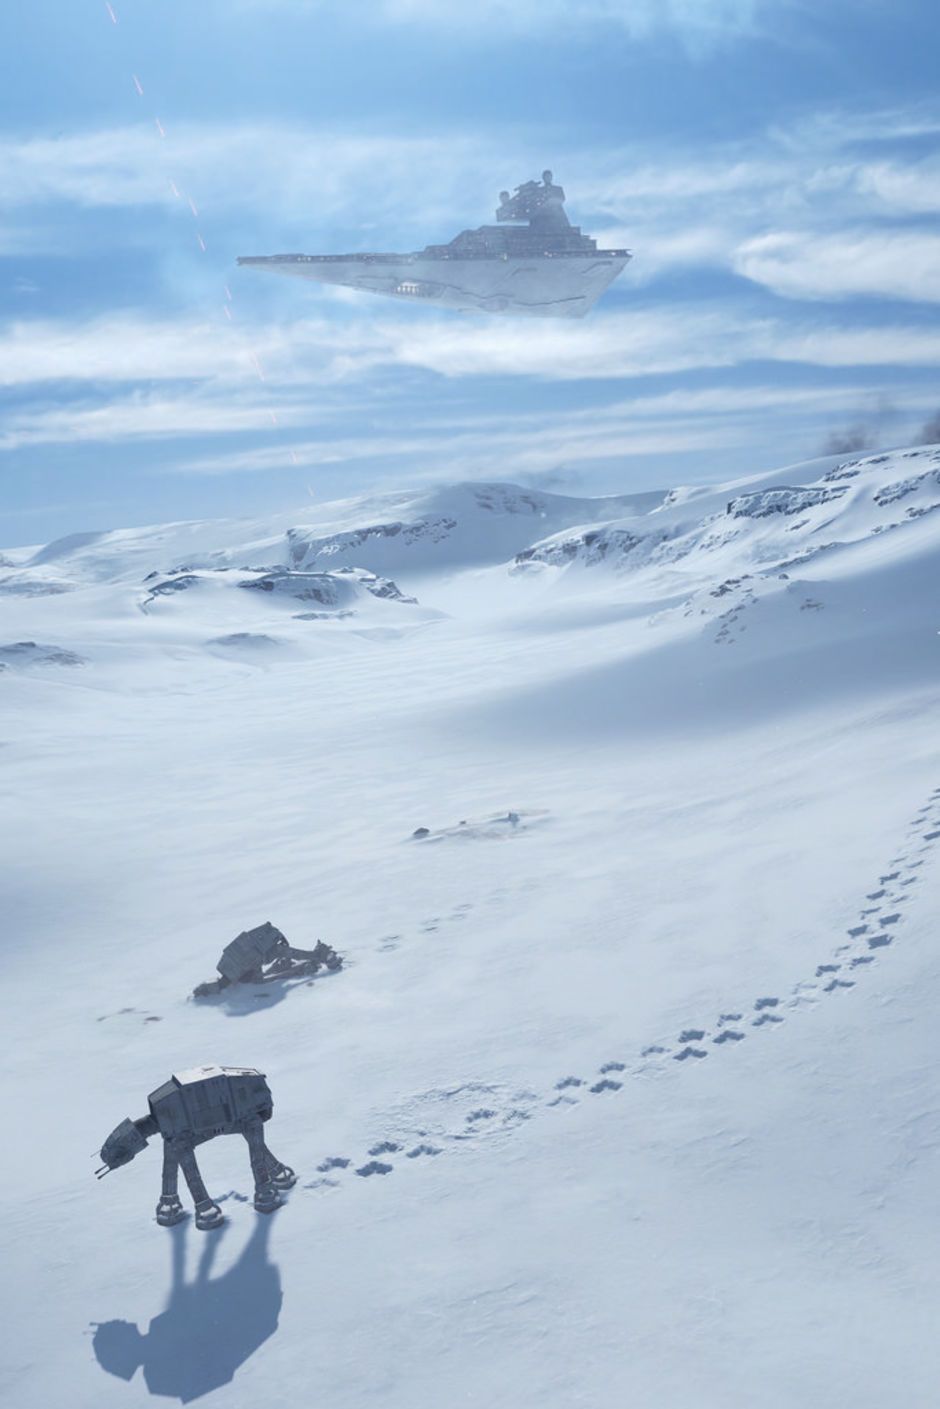 These Star Wars Battlefront Screenshots Are Beautiful. Star wars picture, Star wars empire, Star wars artwork